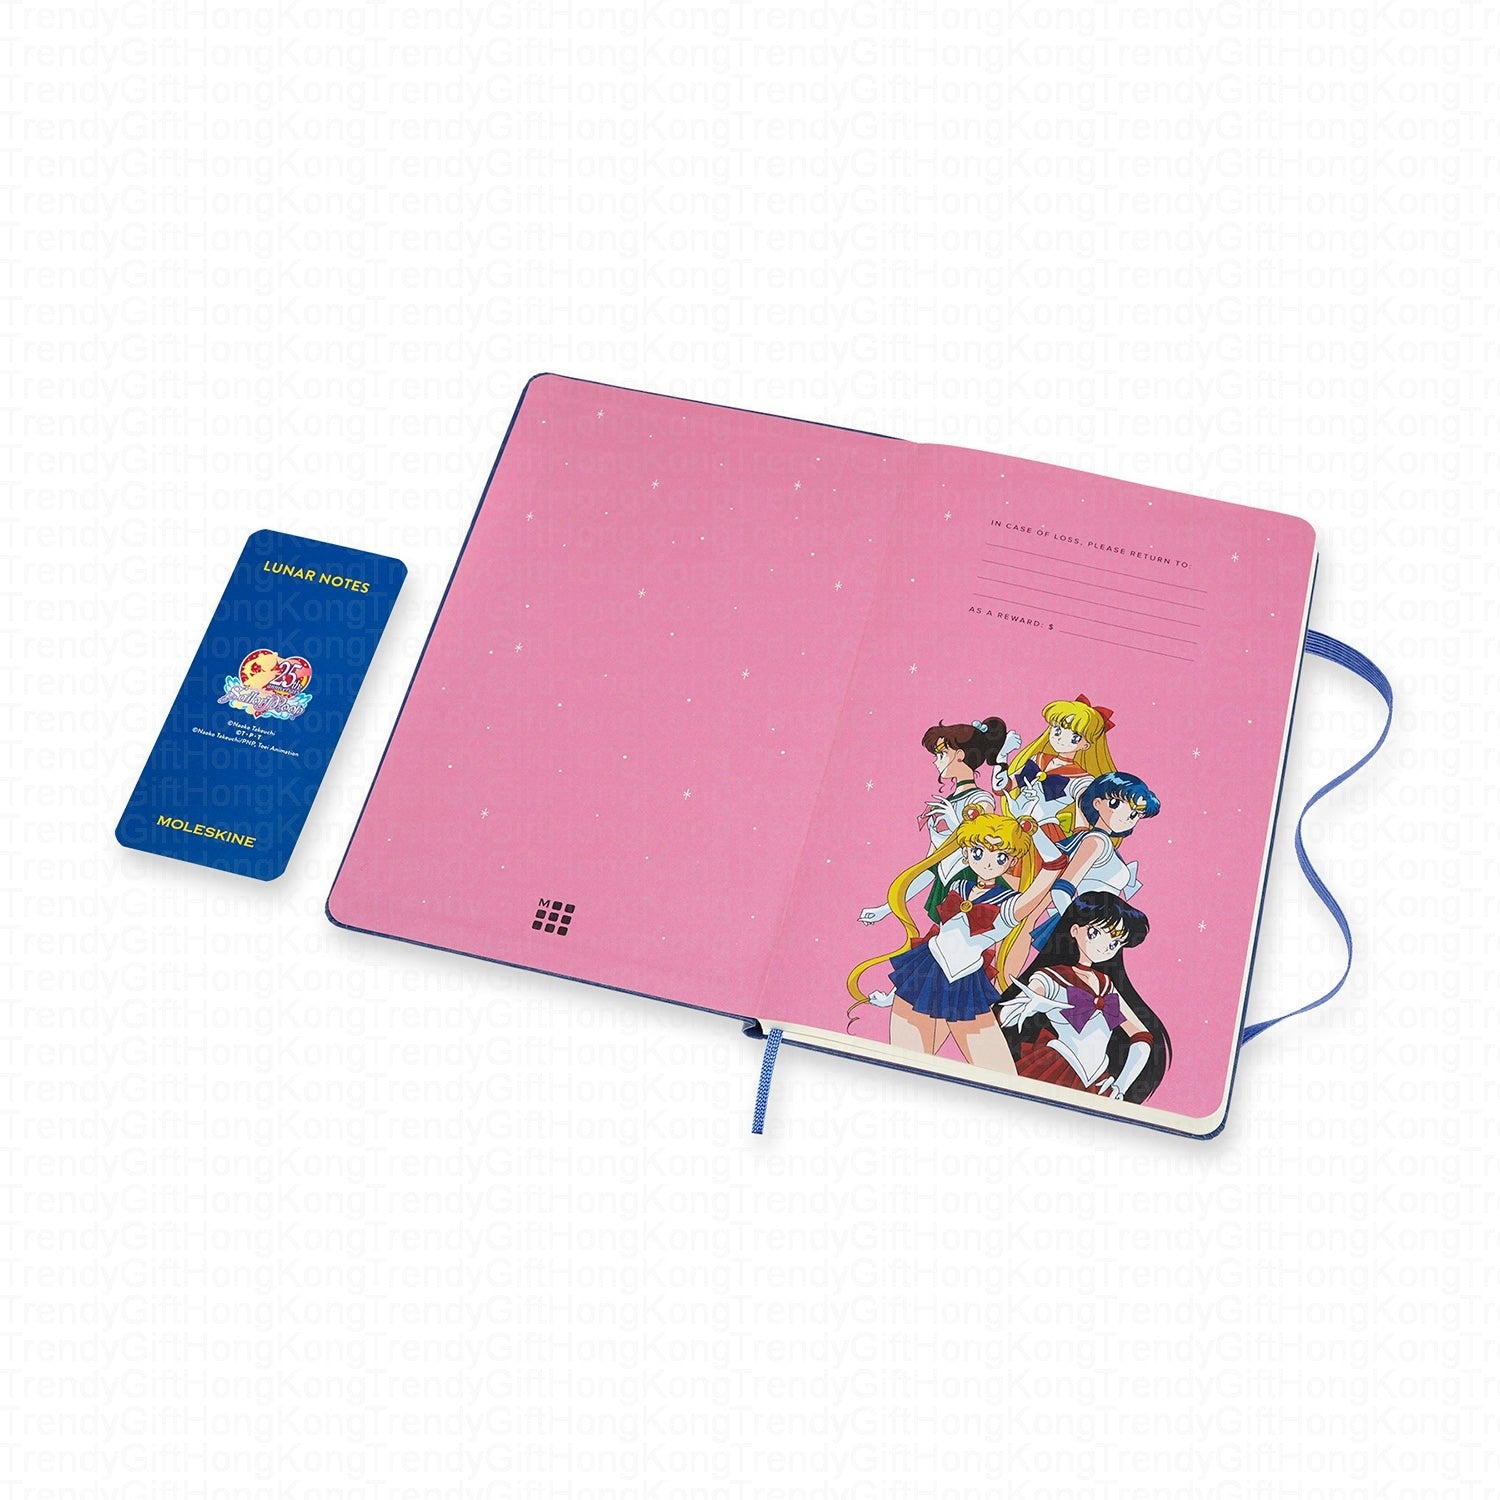 Moleskine Sailor Moon Limited Edition Large Ruled Notebook - 13x21cm trendygifthk